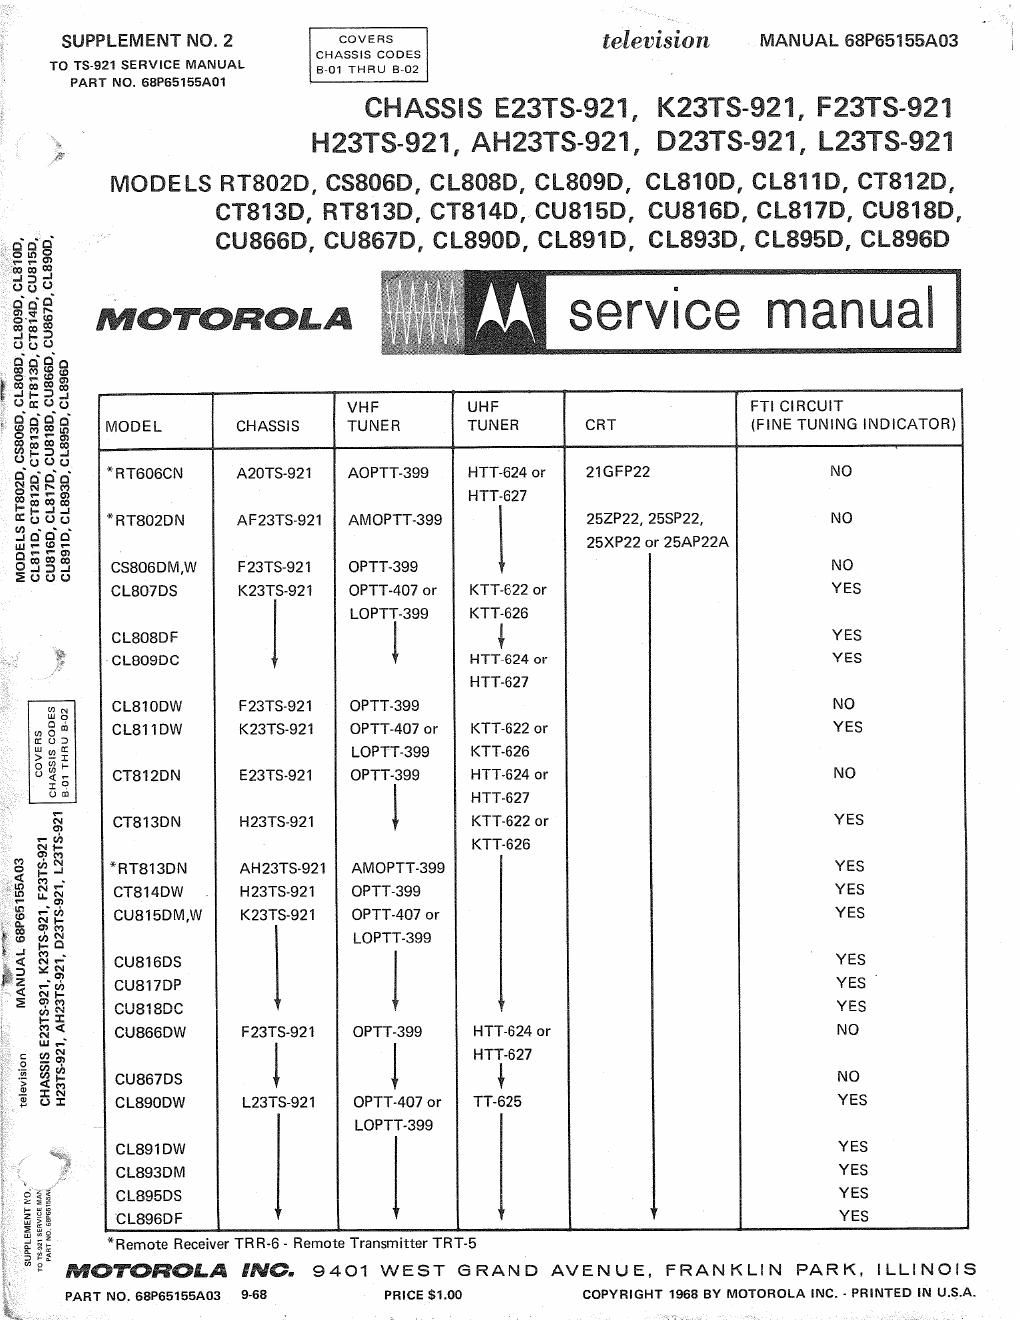 motorola cl 809 d service manual